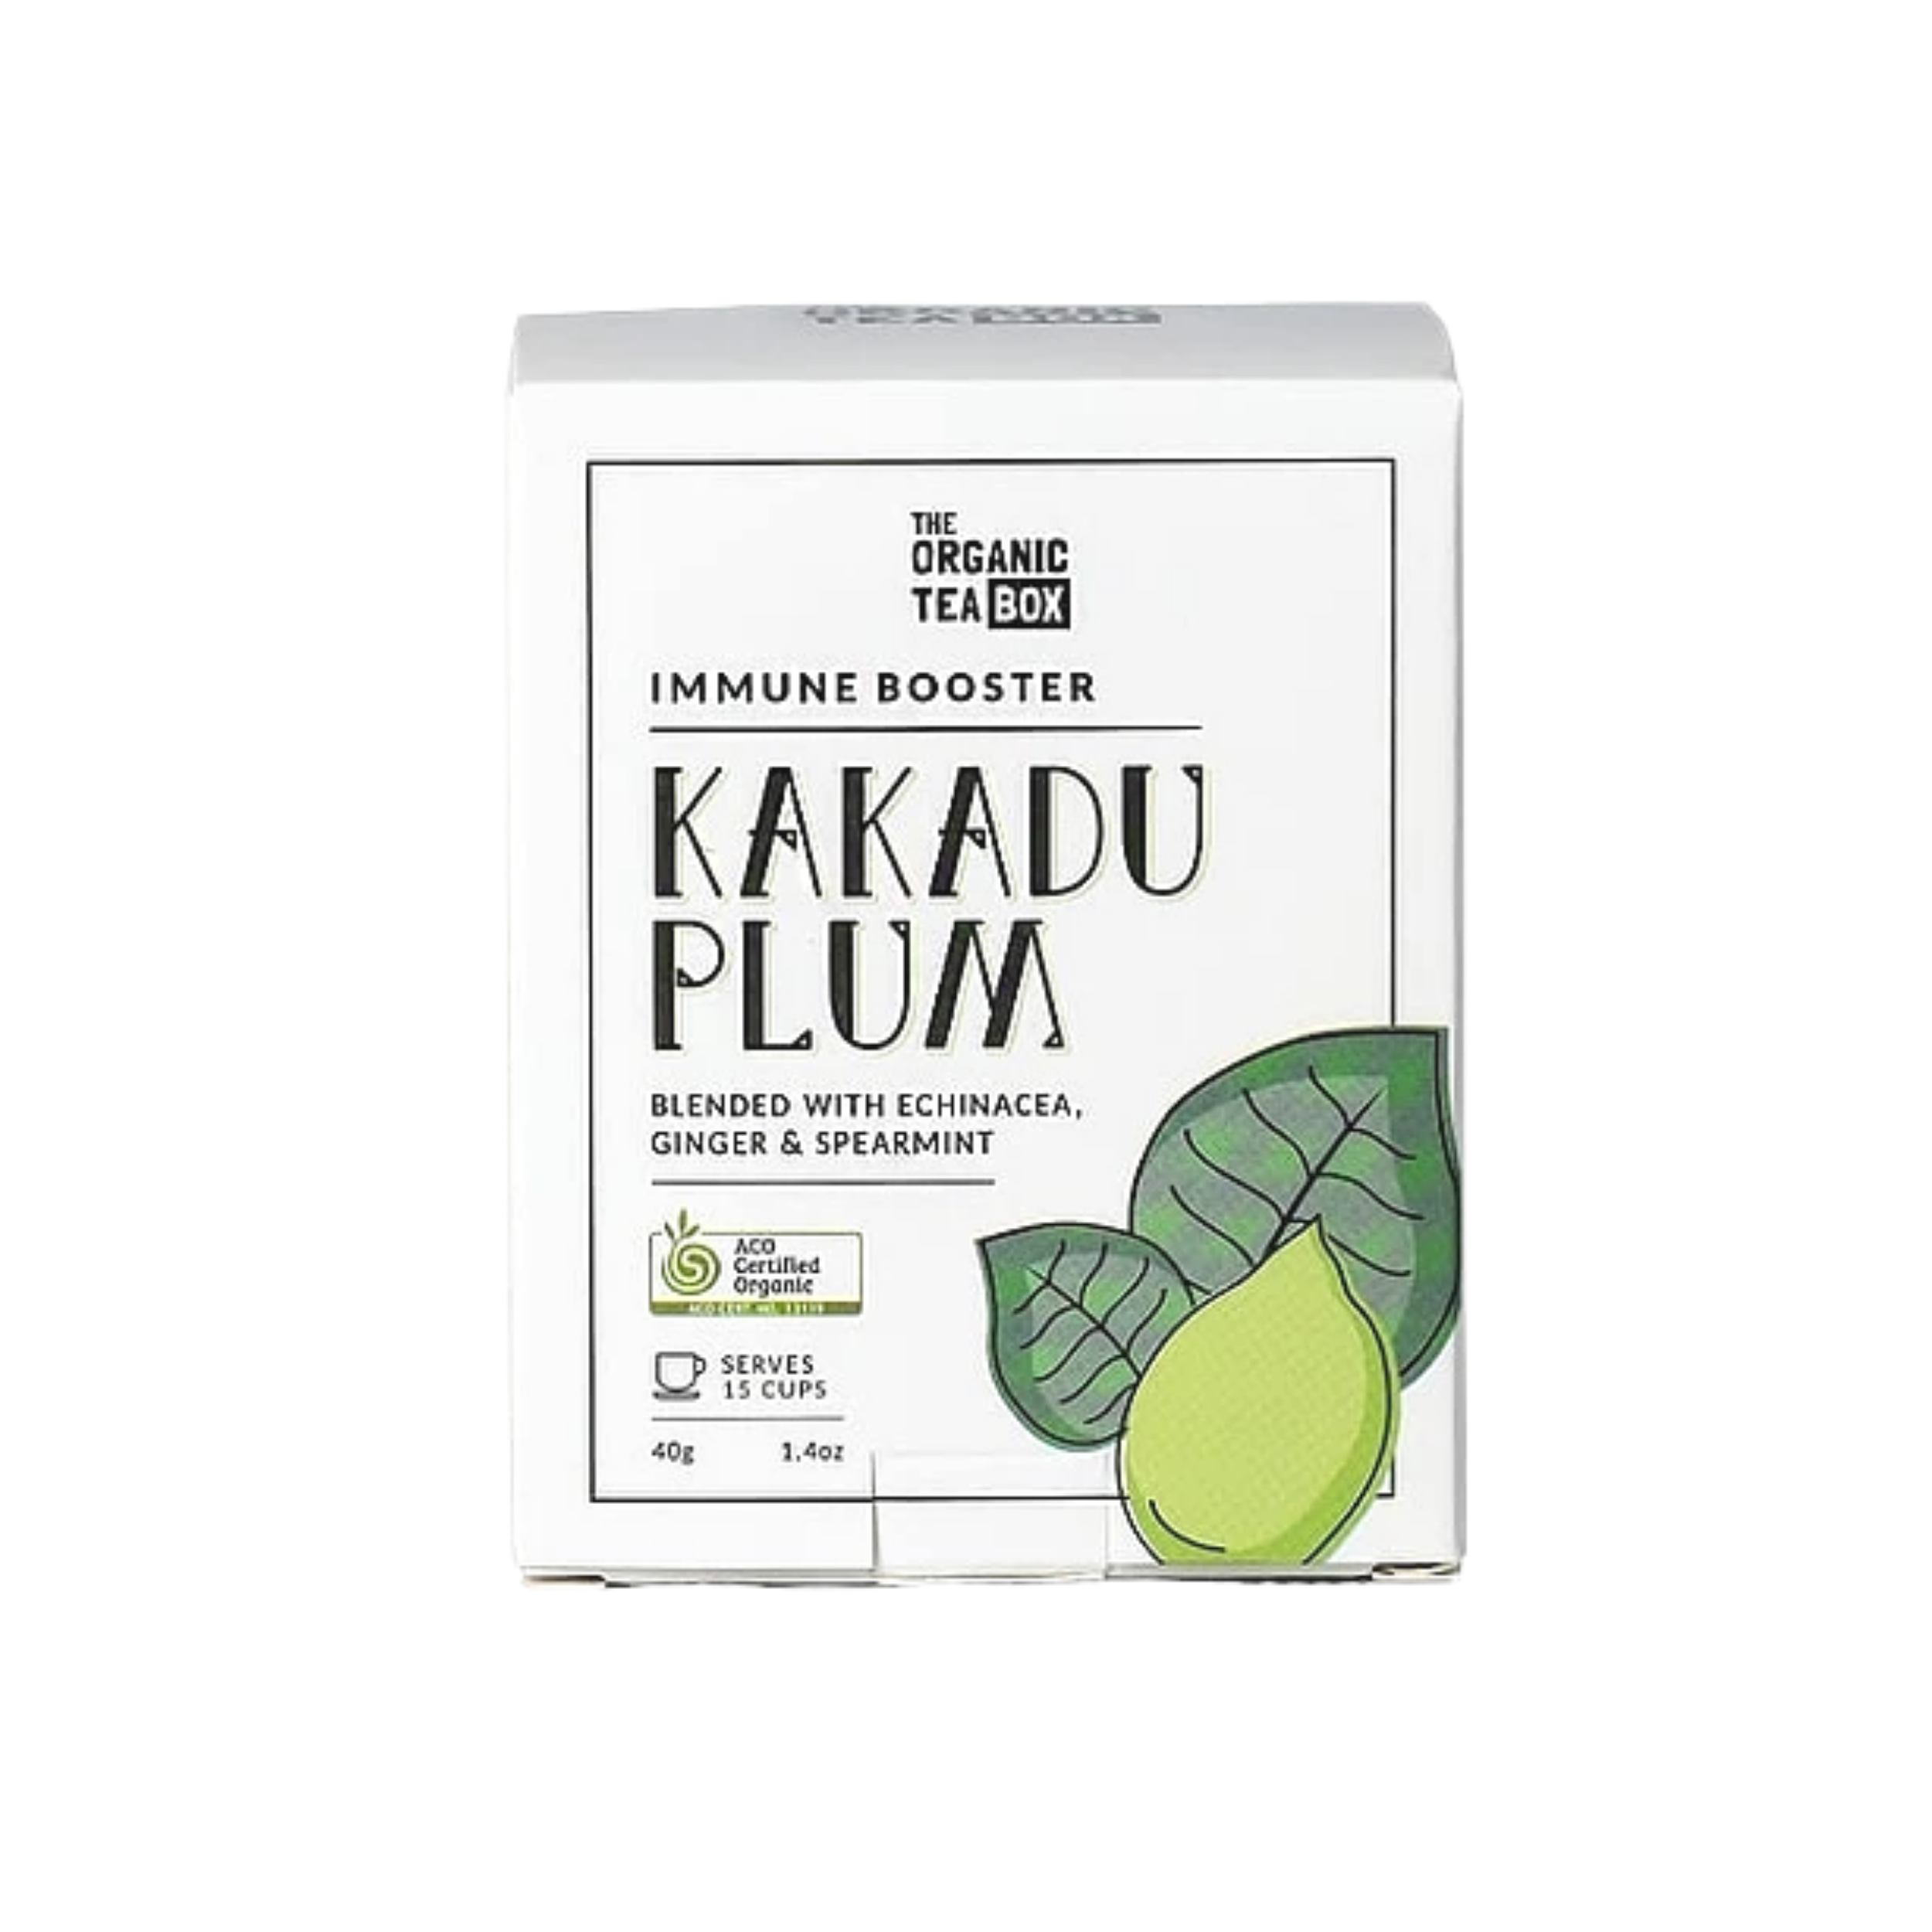 The Organic Tea Box Immune Booster - Kakadu Plum, Echinacea, Ginger & Spearmint 40g